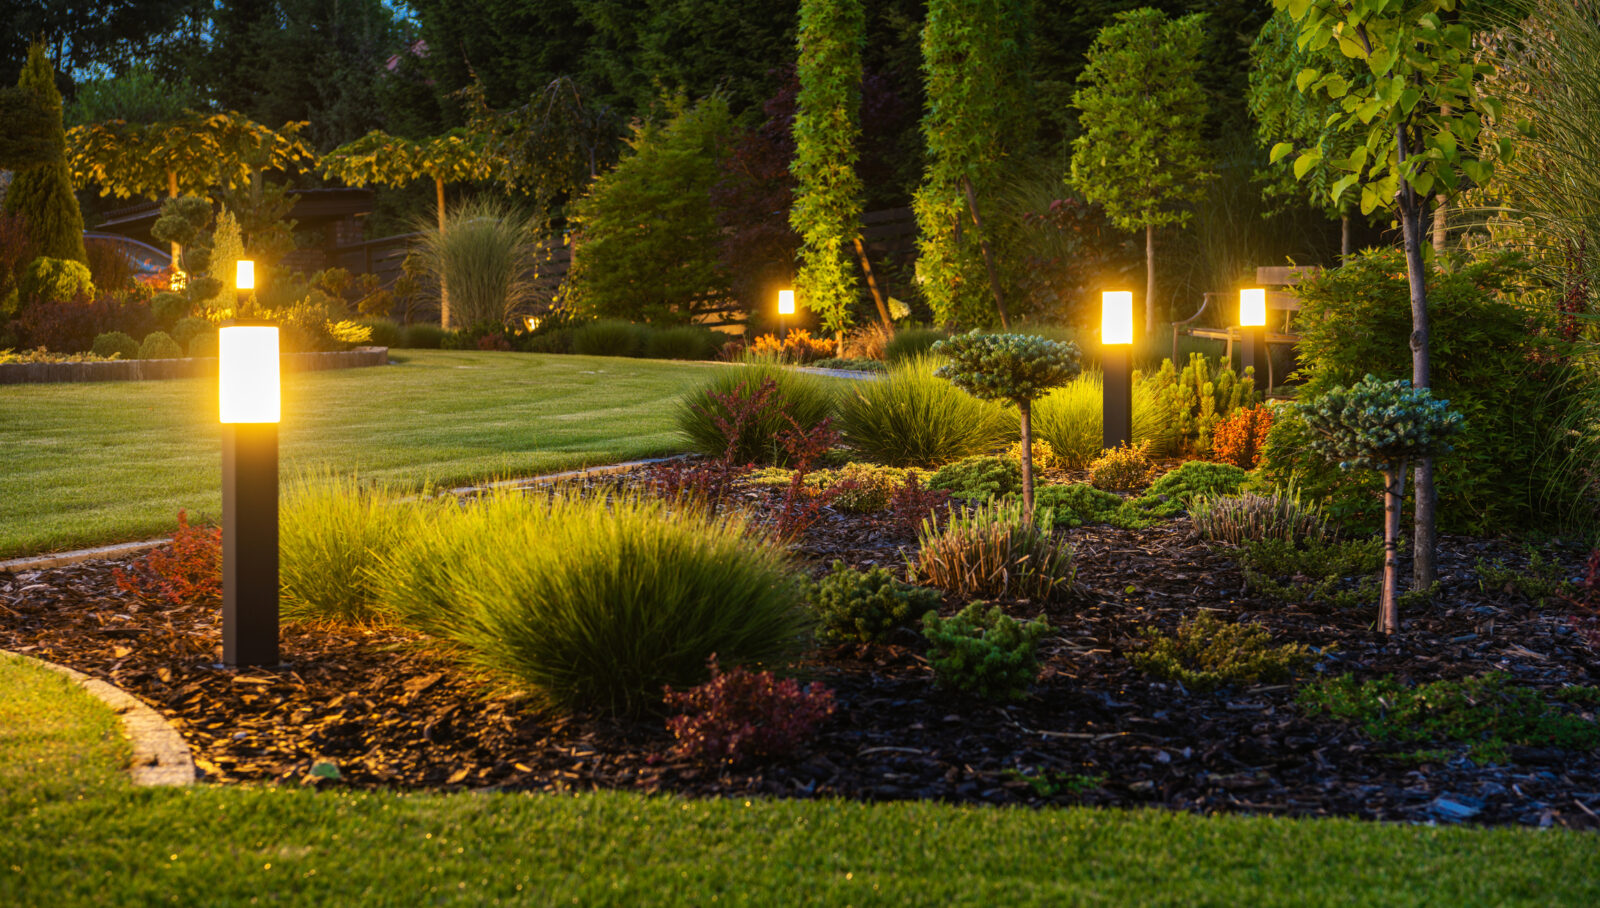 4 Benefits of Outdoor Lighting sposato irrigation